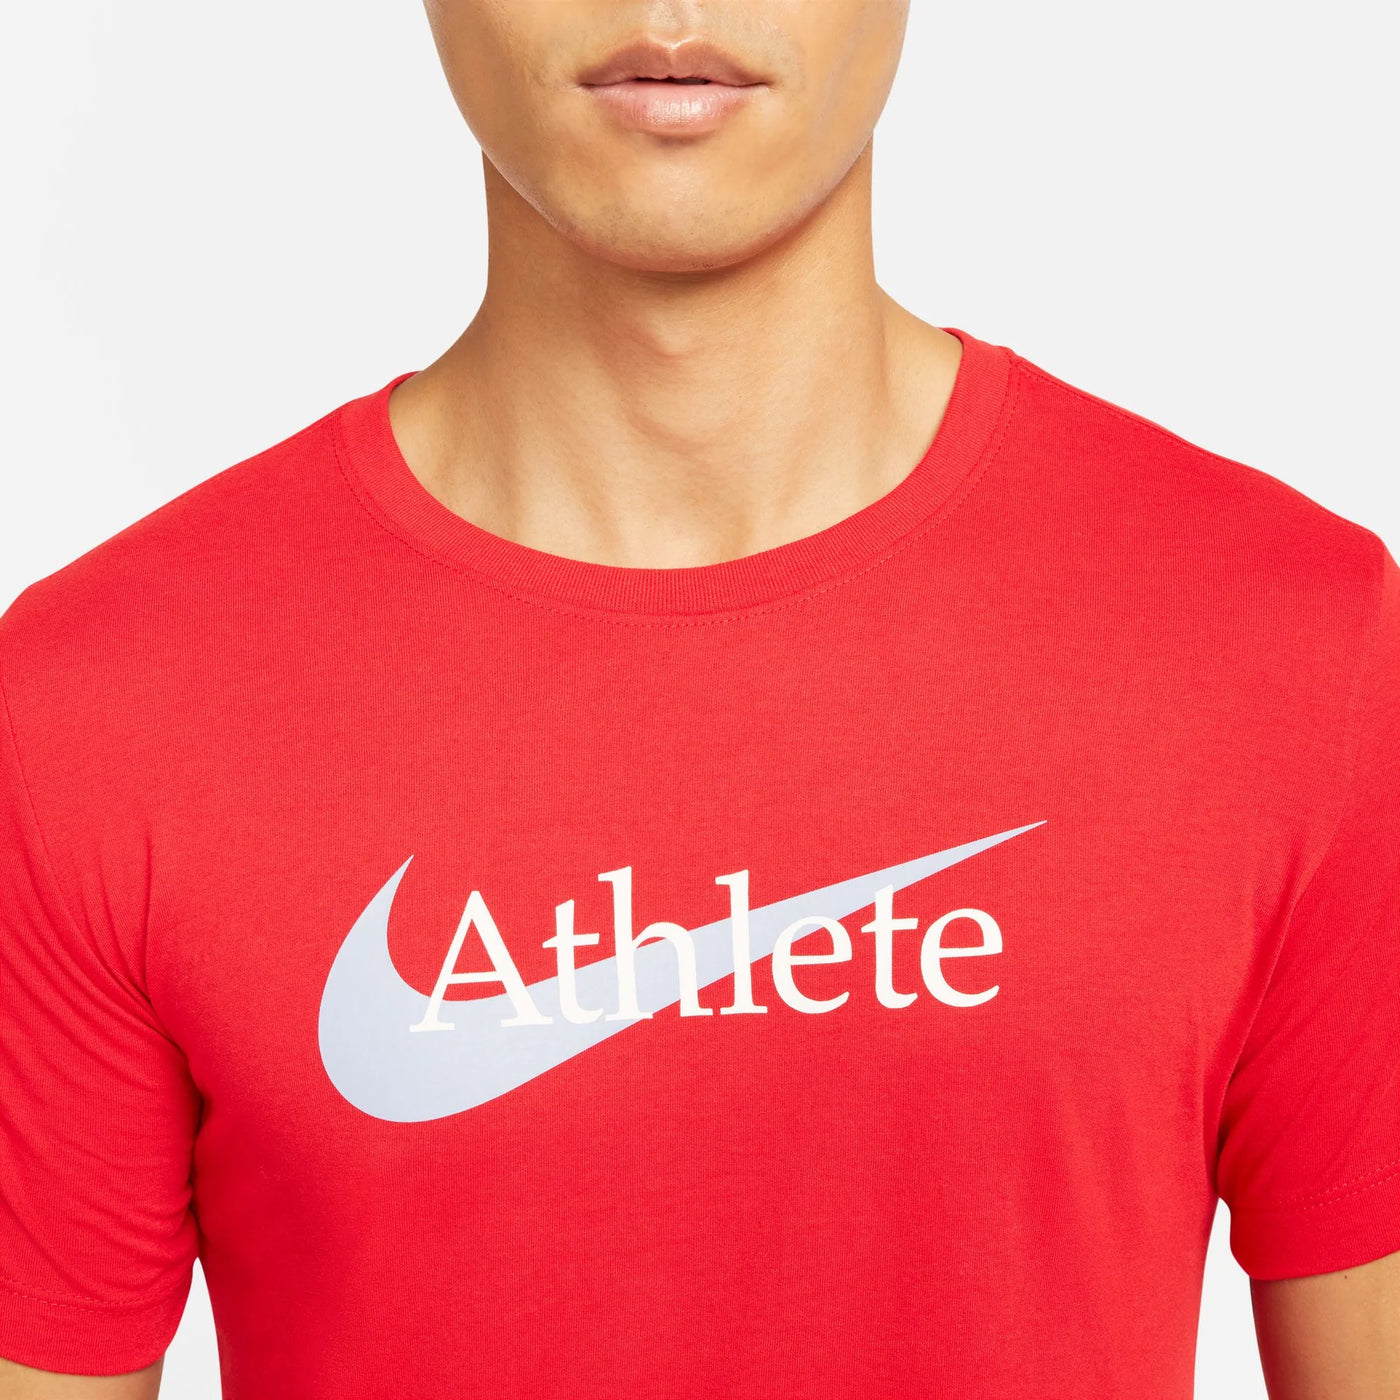 Nike Men Dri-FIT Swoosh Short Sleeve Training T-Shirt